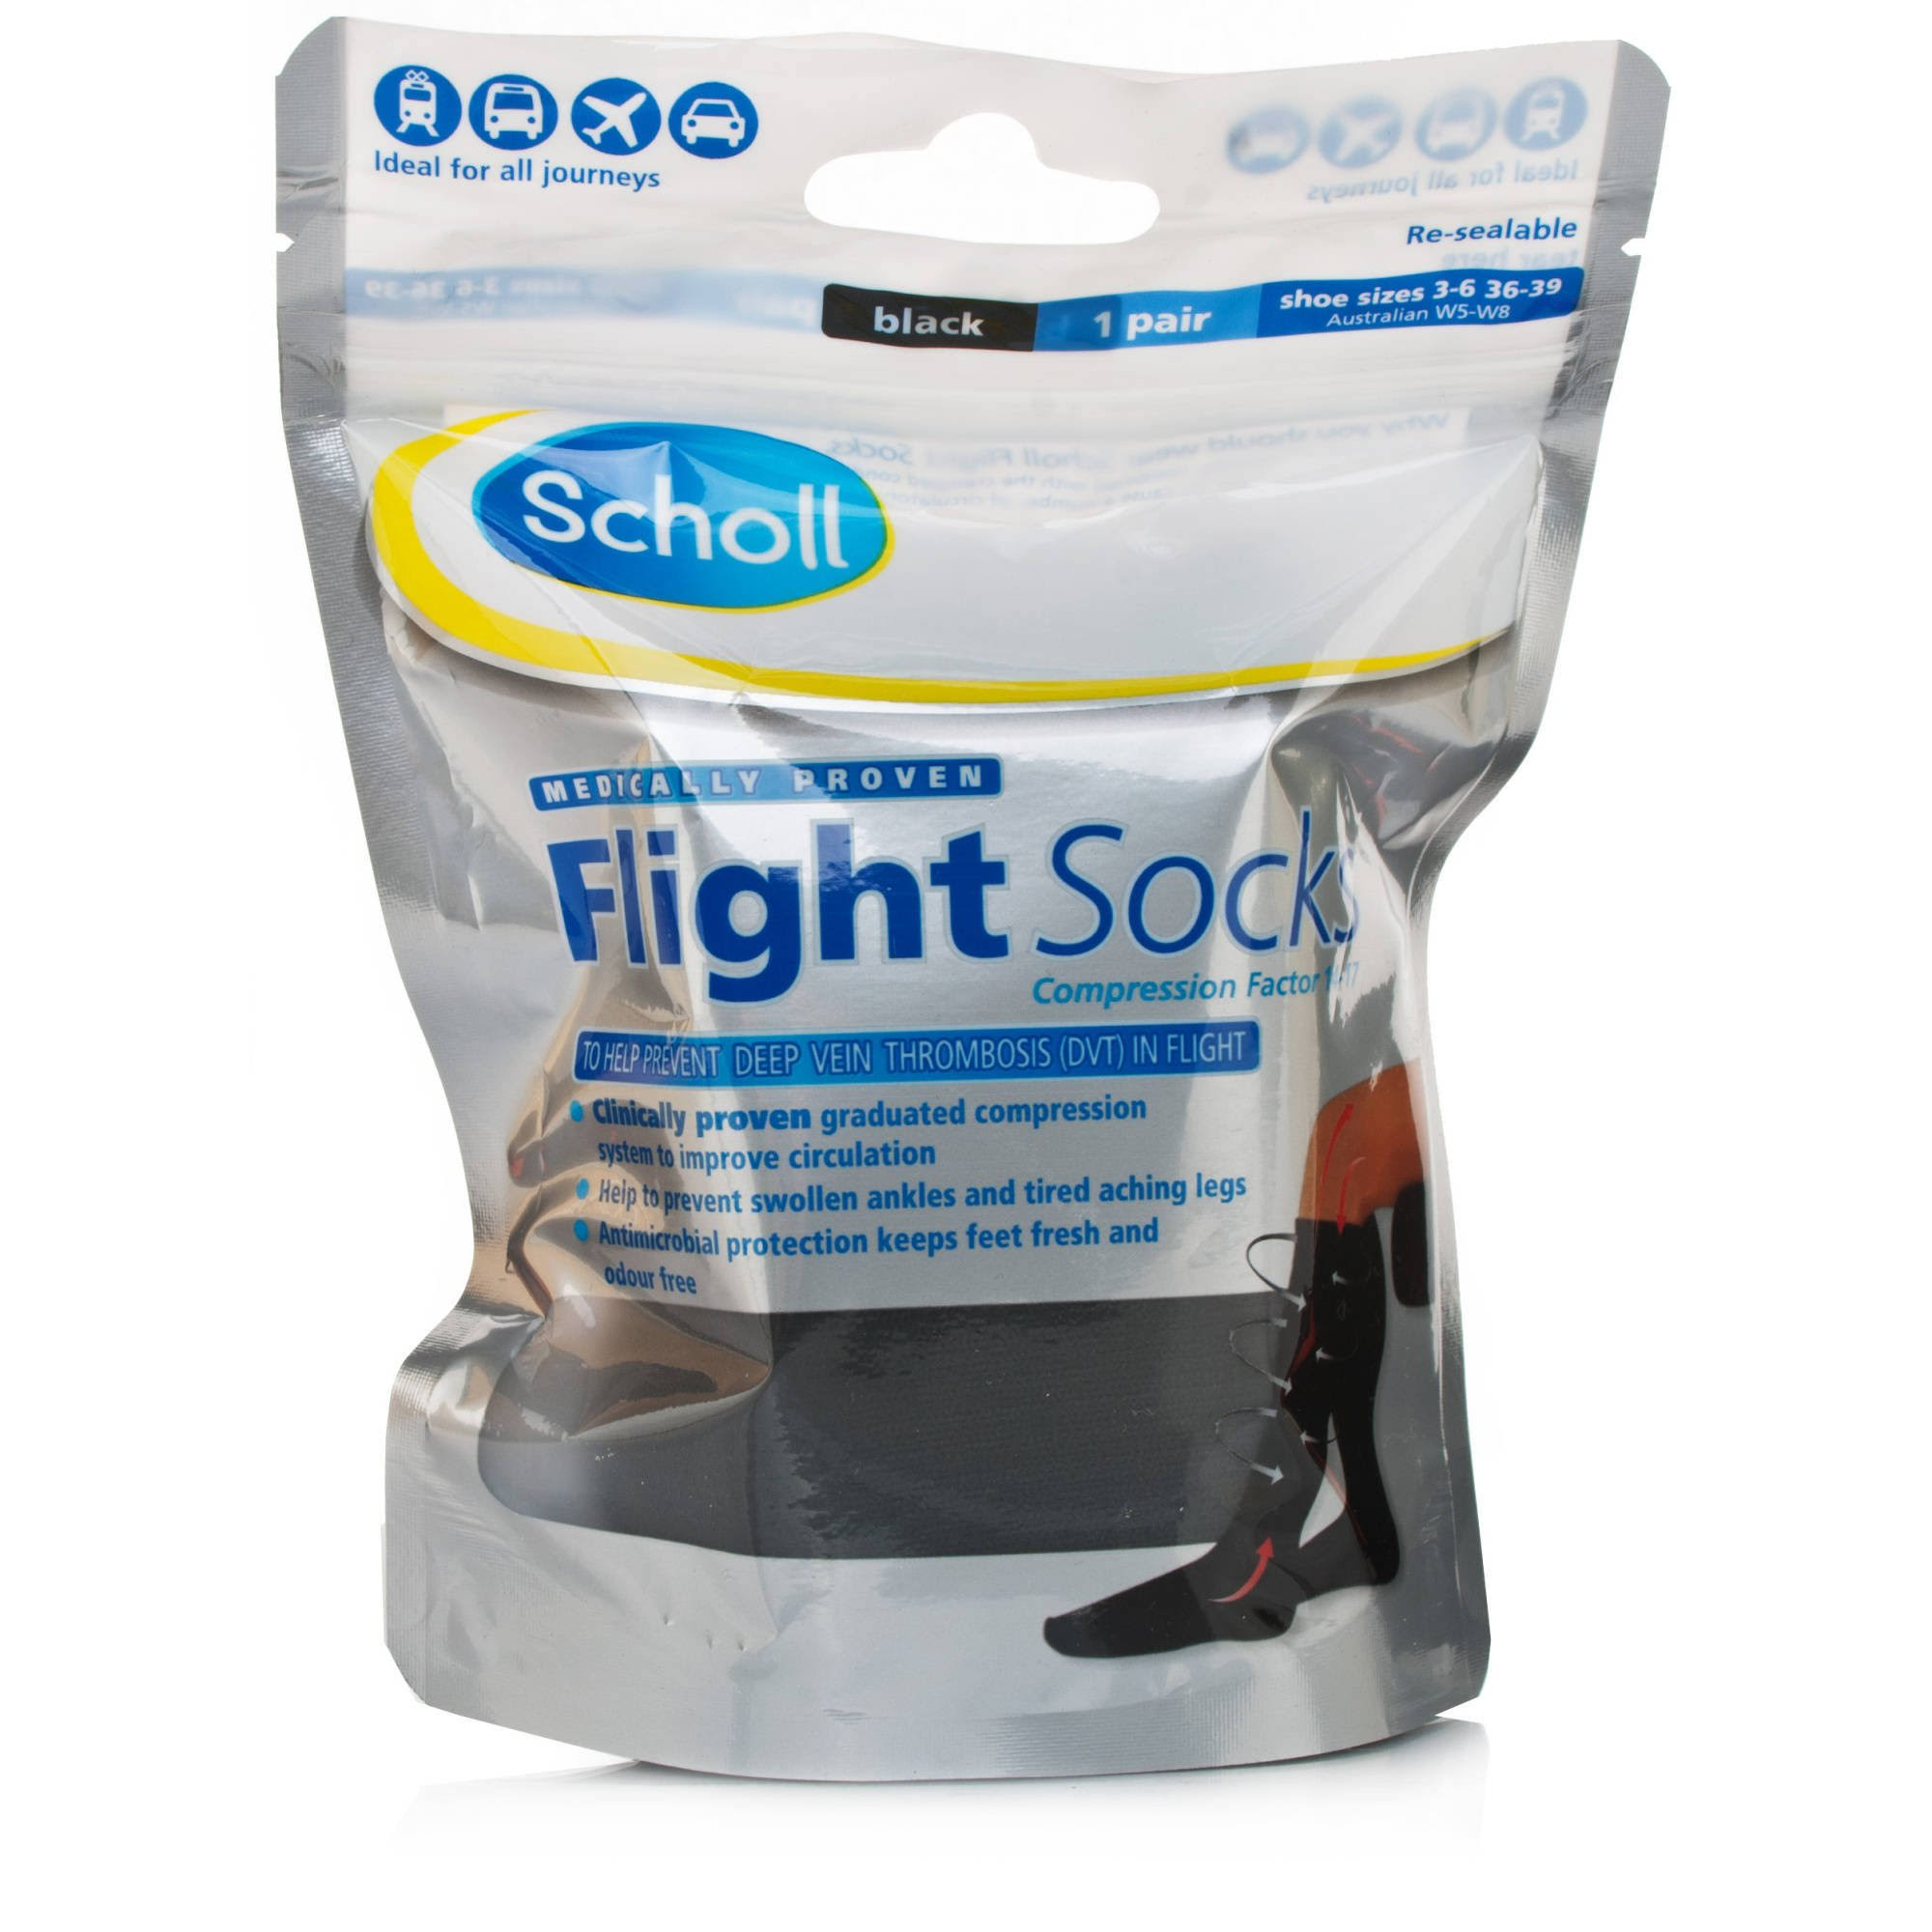 Scholl Flight Socks - Black, size 3-6